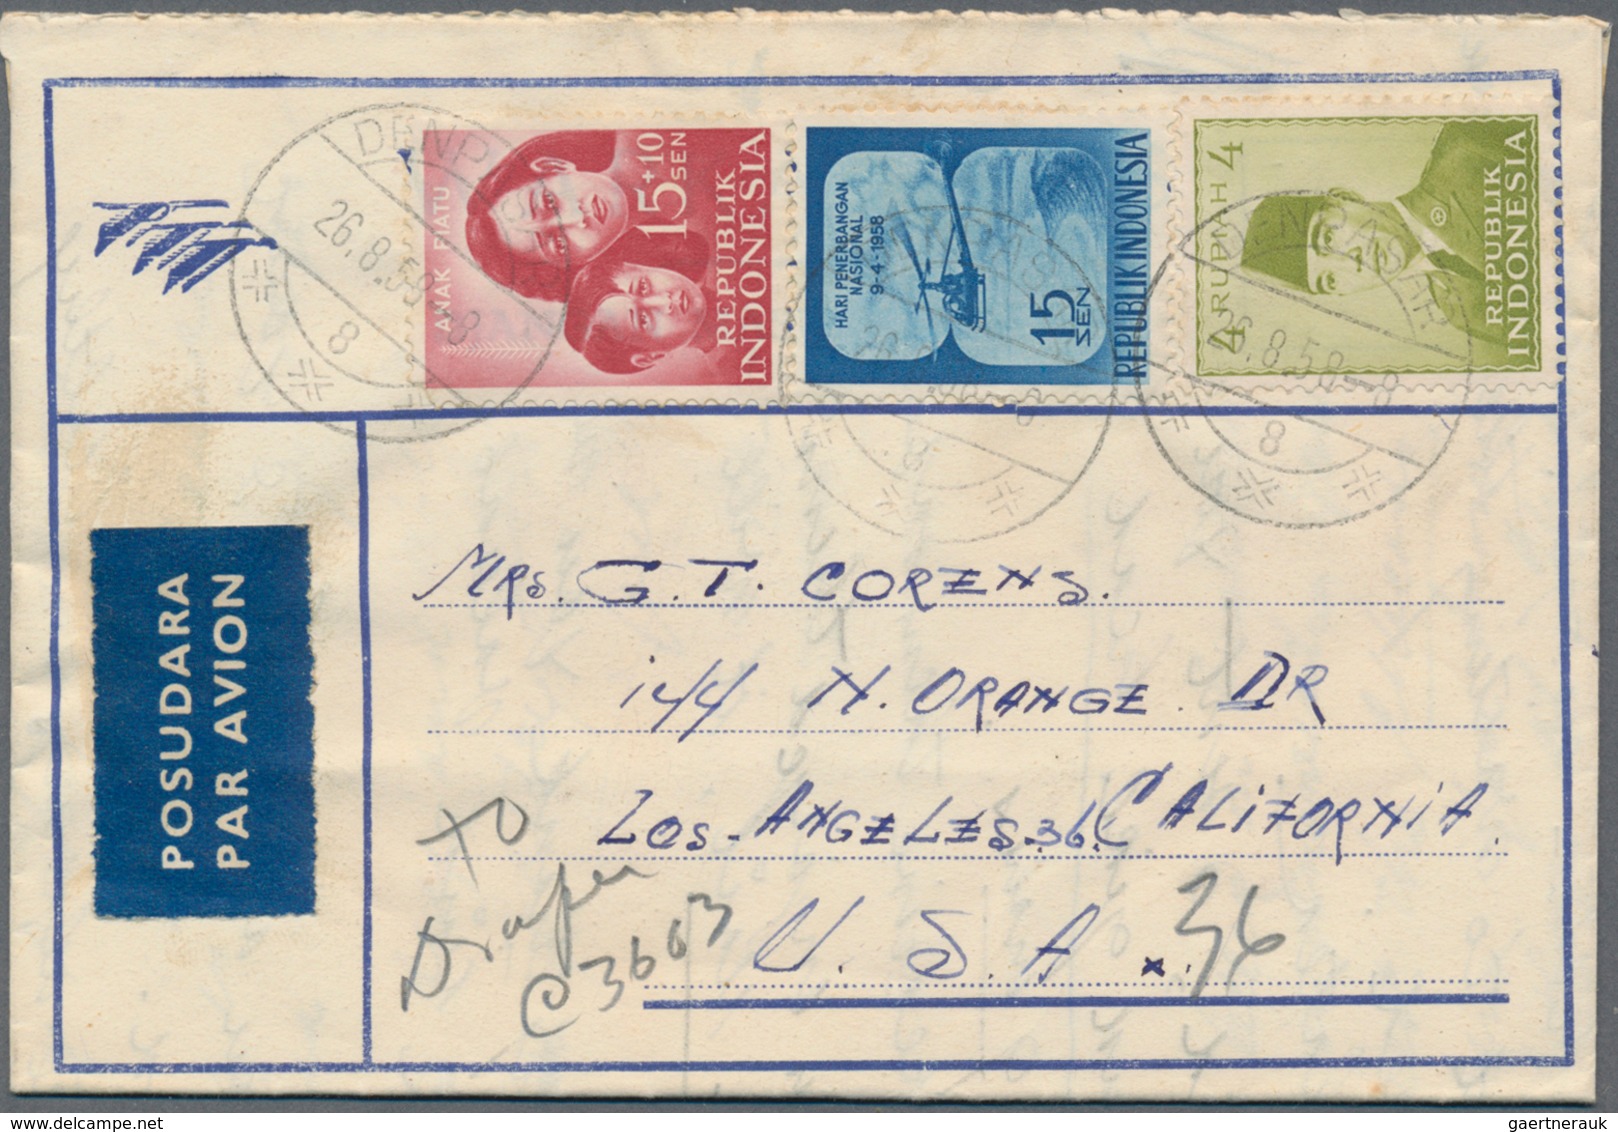 22781 Indonesien: 1949/97 (ca.), stationery envelopes (warkat pos / postblad) specialized stock: 10 S. (mi